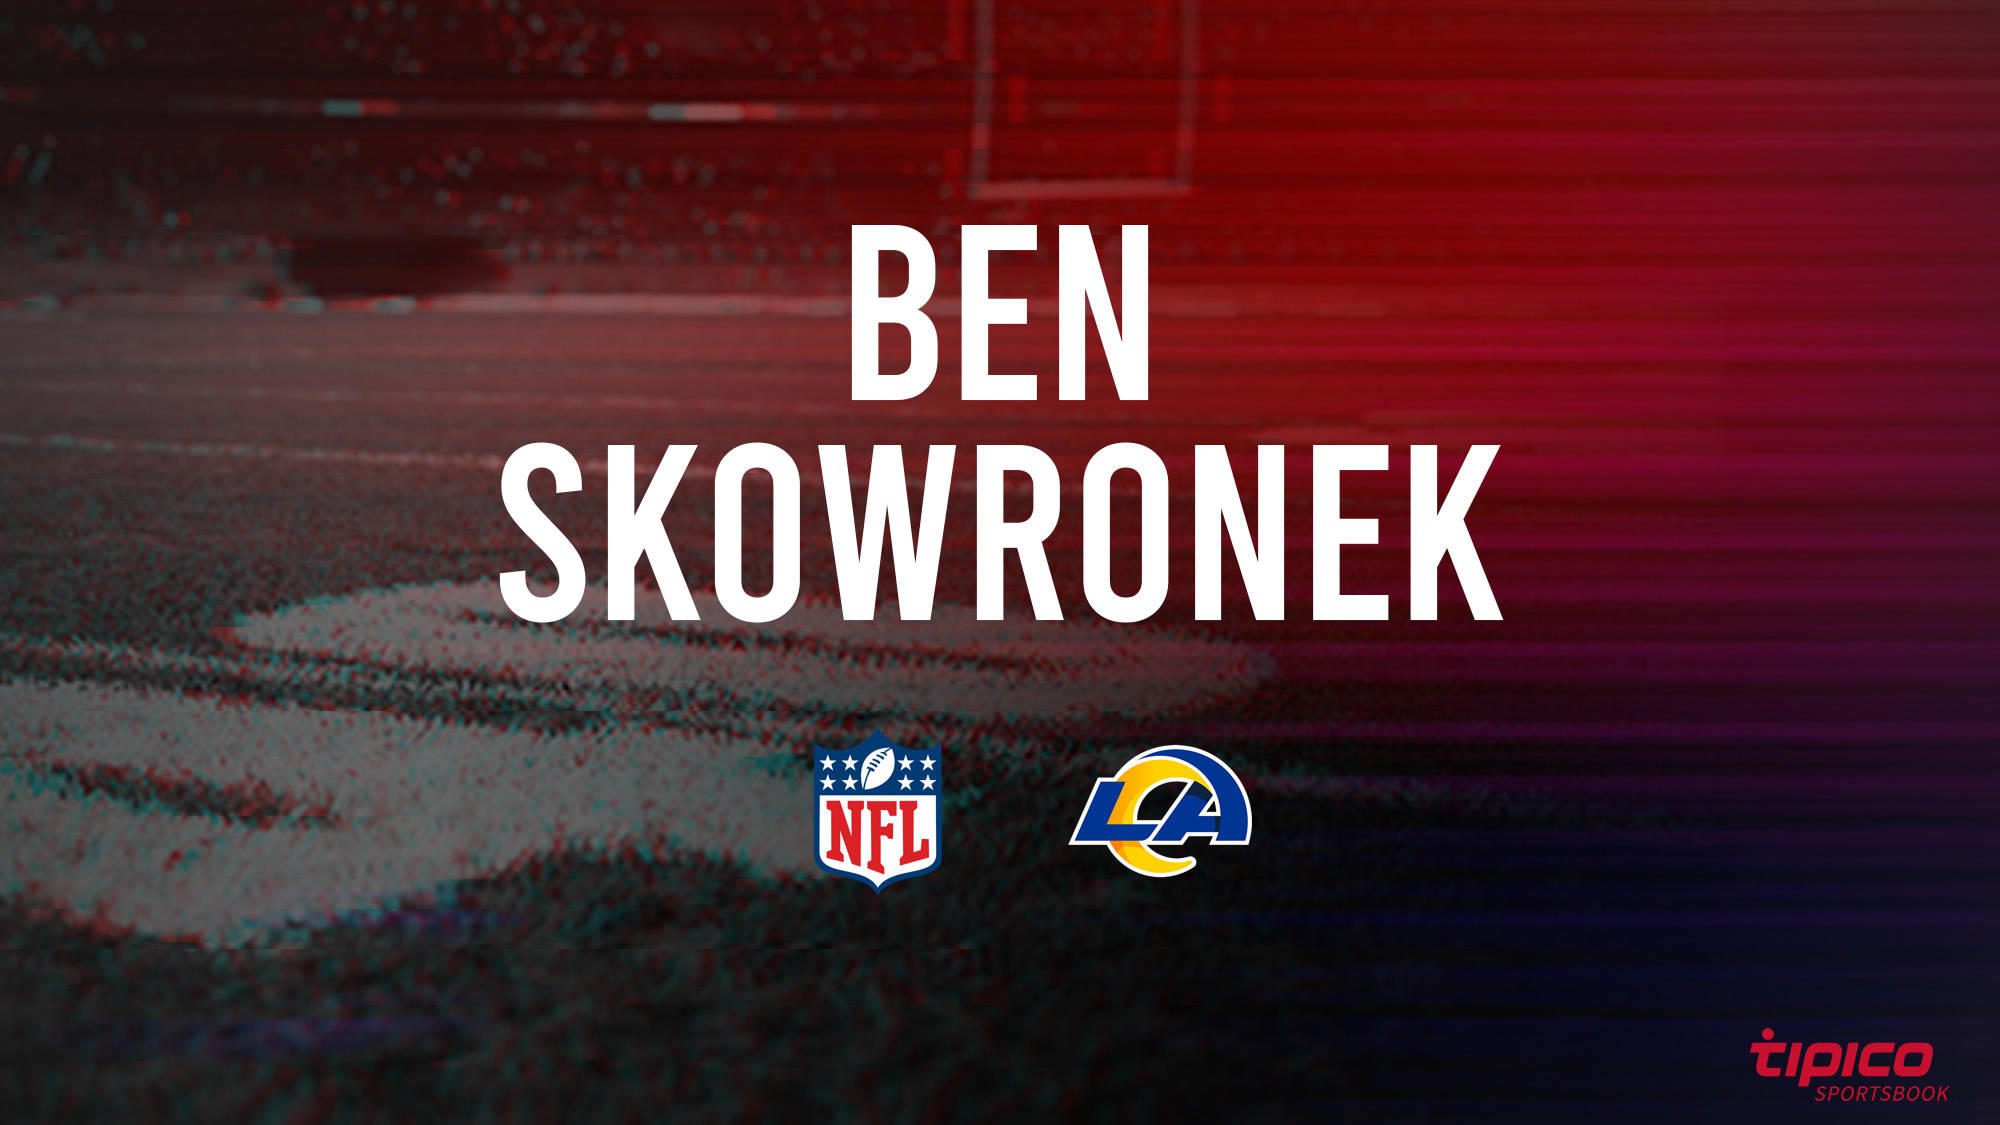 Ben Skowronek vs. Seattle Seahawks